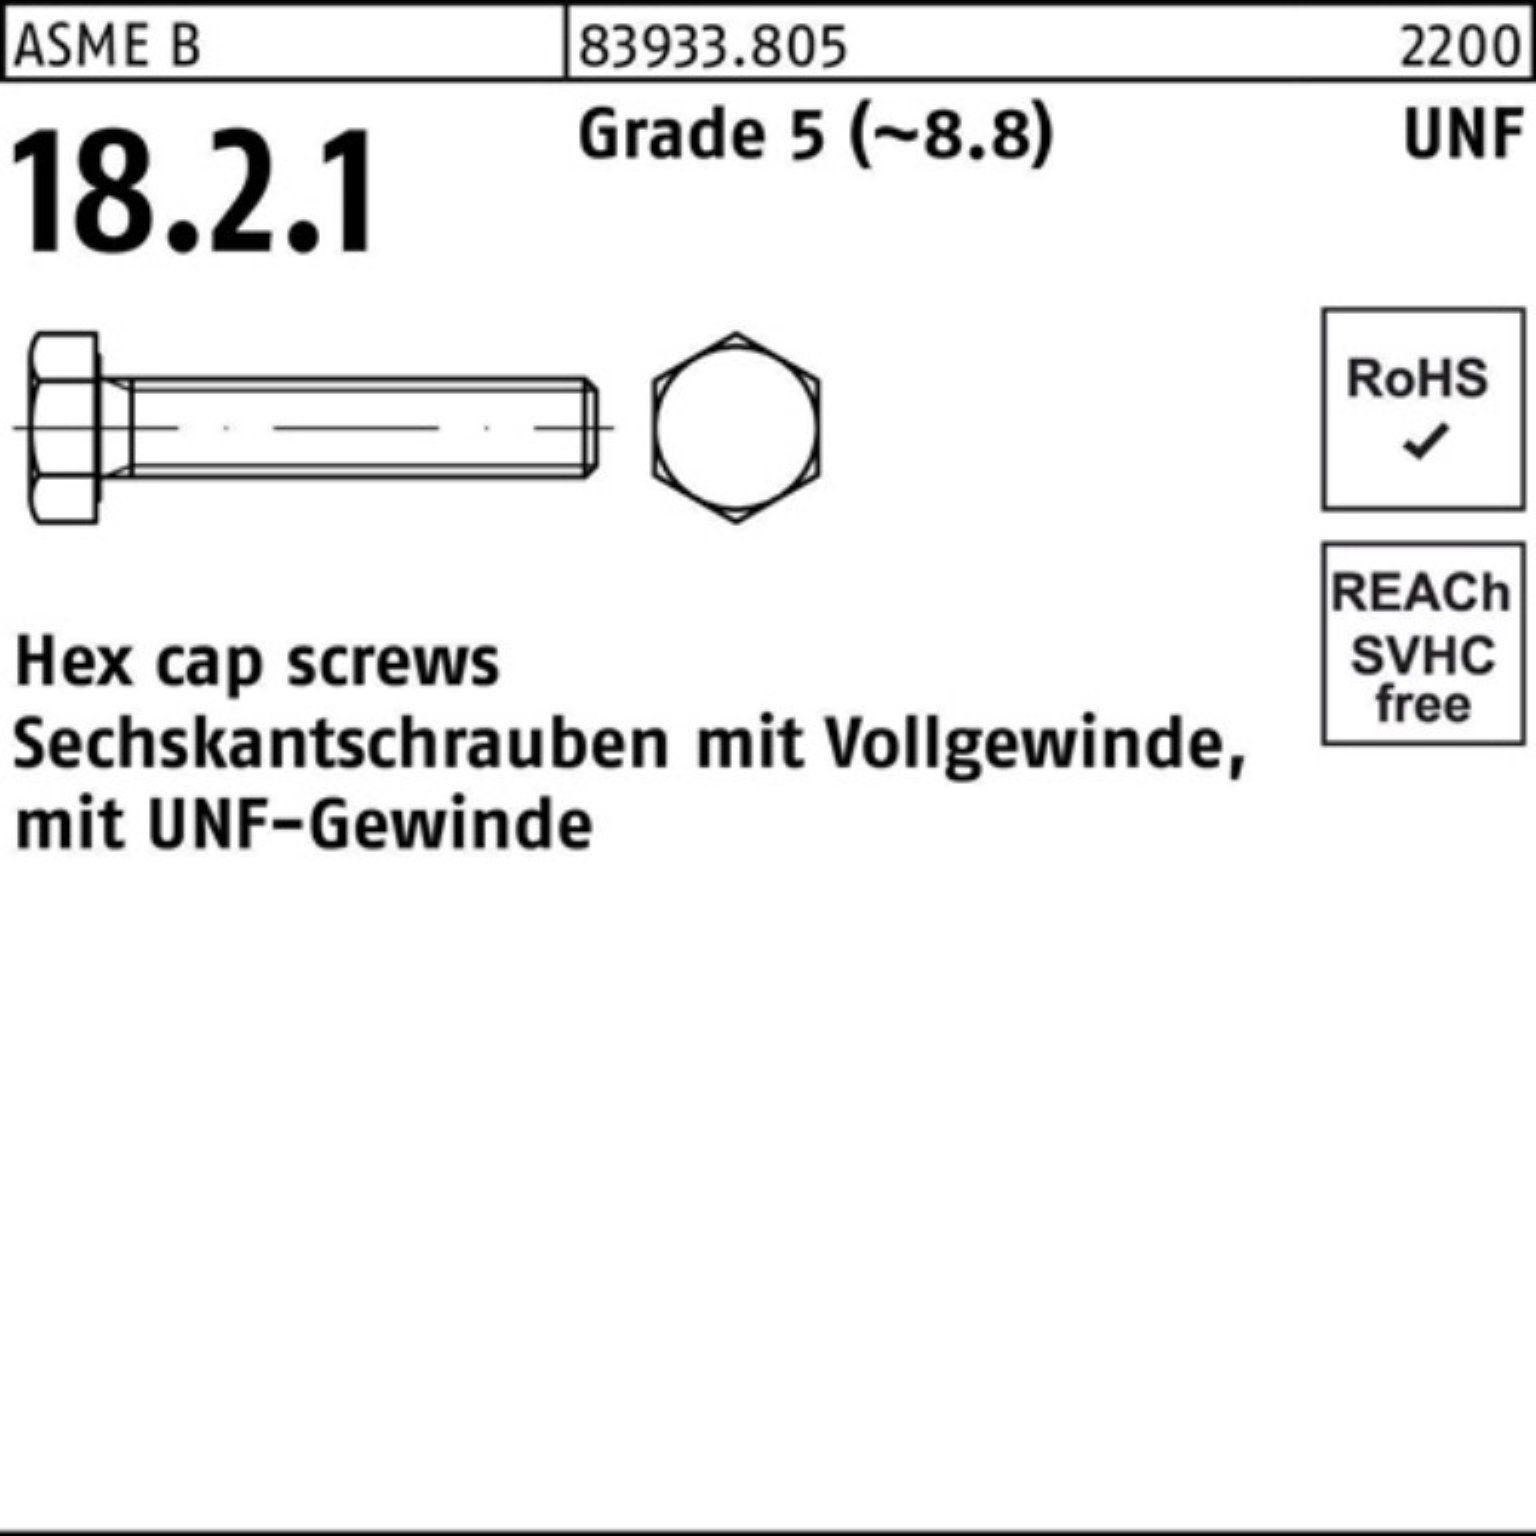 Reyher Sechskantschraube 100er Pack Sechskantschraube R 83933 UNF-Gewinde VG 7/16x 3/4 Grade 5